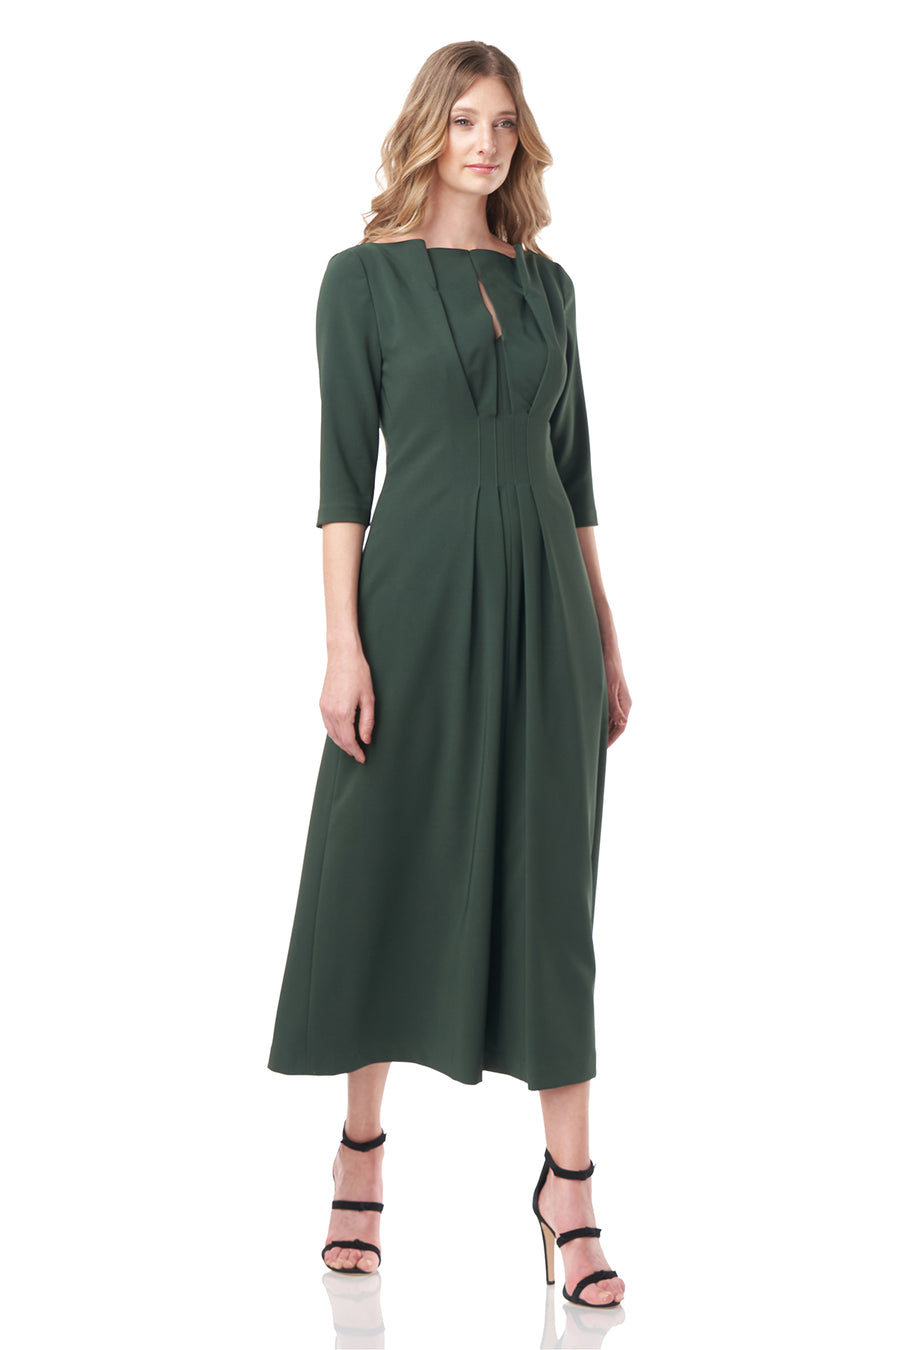 Kay Unger - Catherine Midi Dress - Dark Emerald